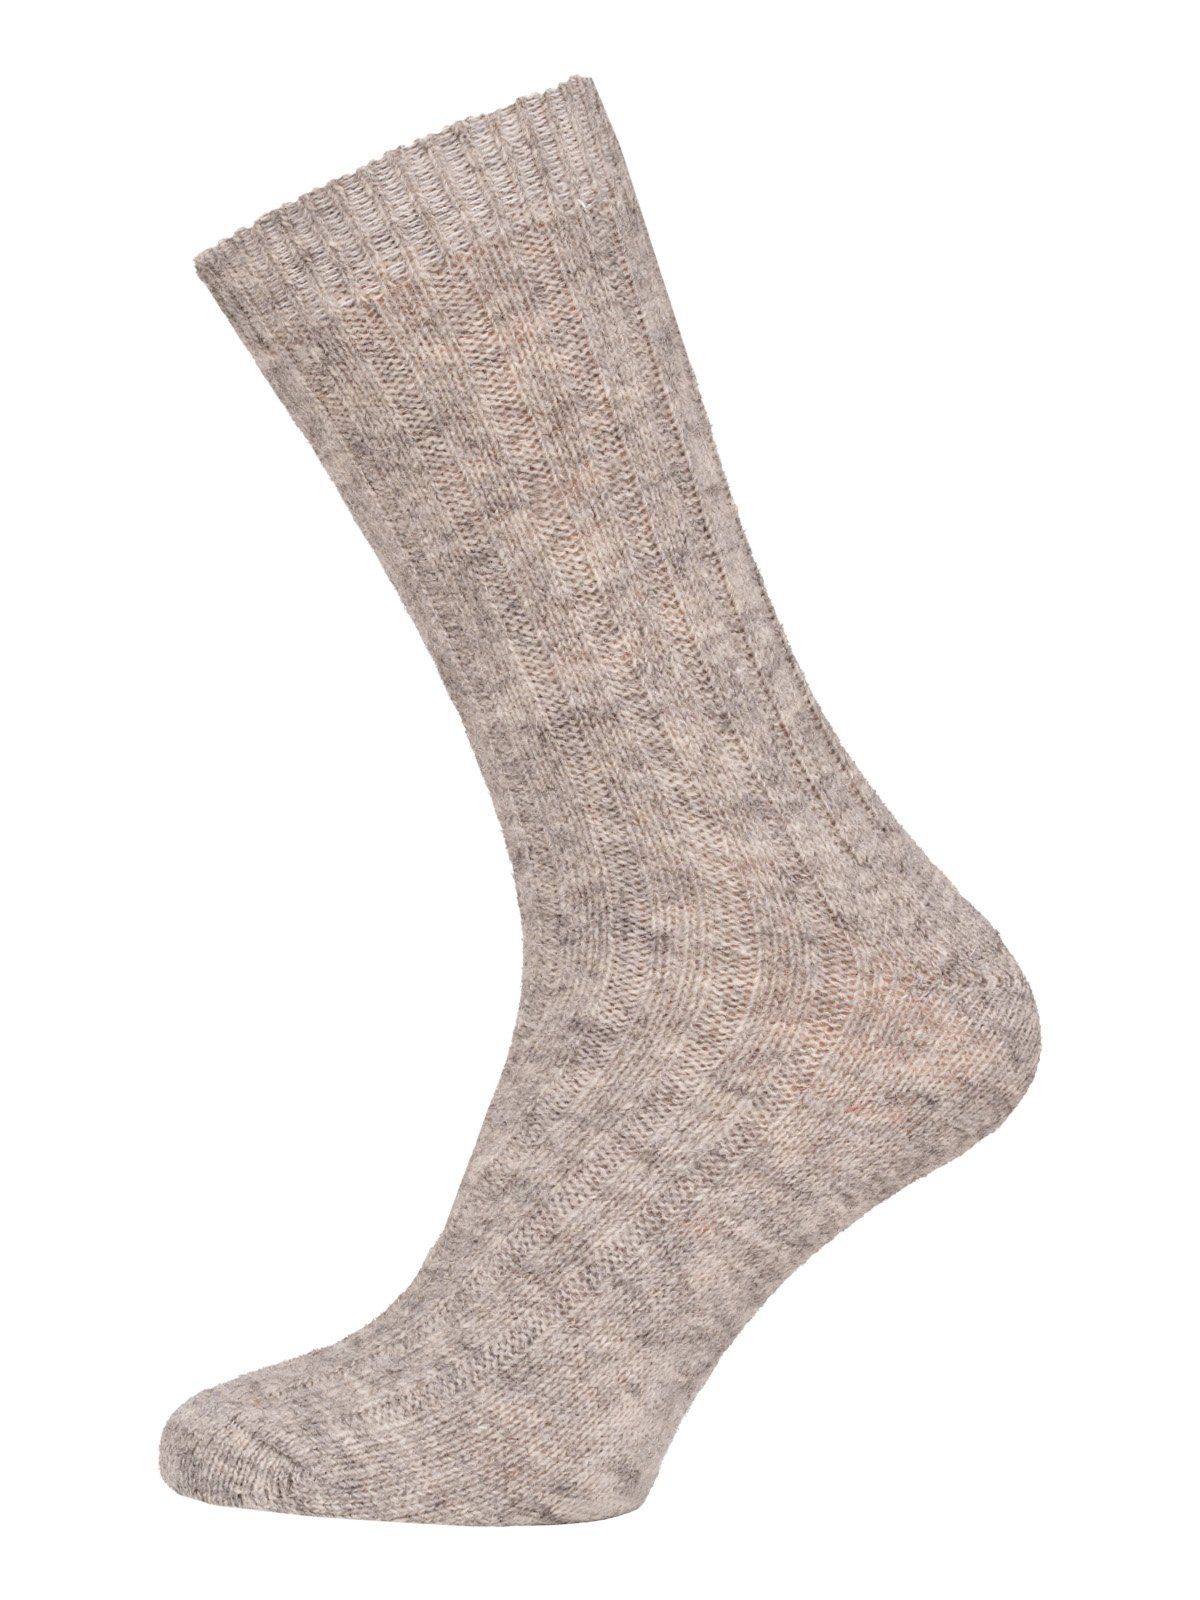 HomeOfSocks Socken Wollsocken aus 95% Wolle (Alpakawolle & Schurwolle) Grau